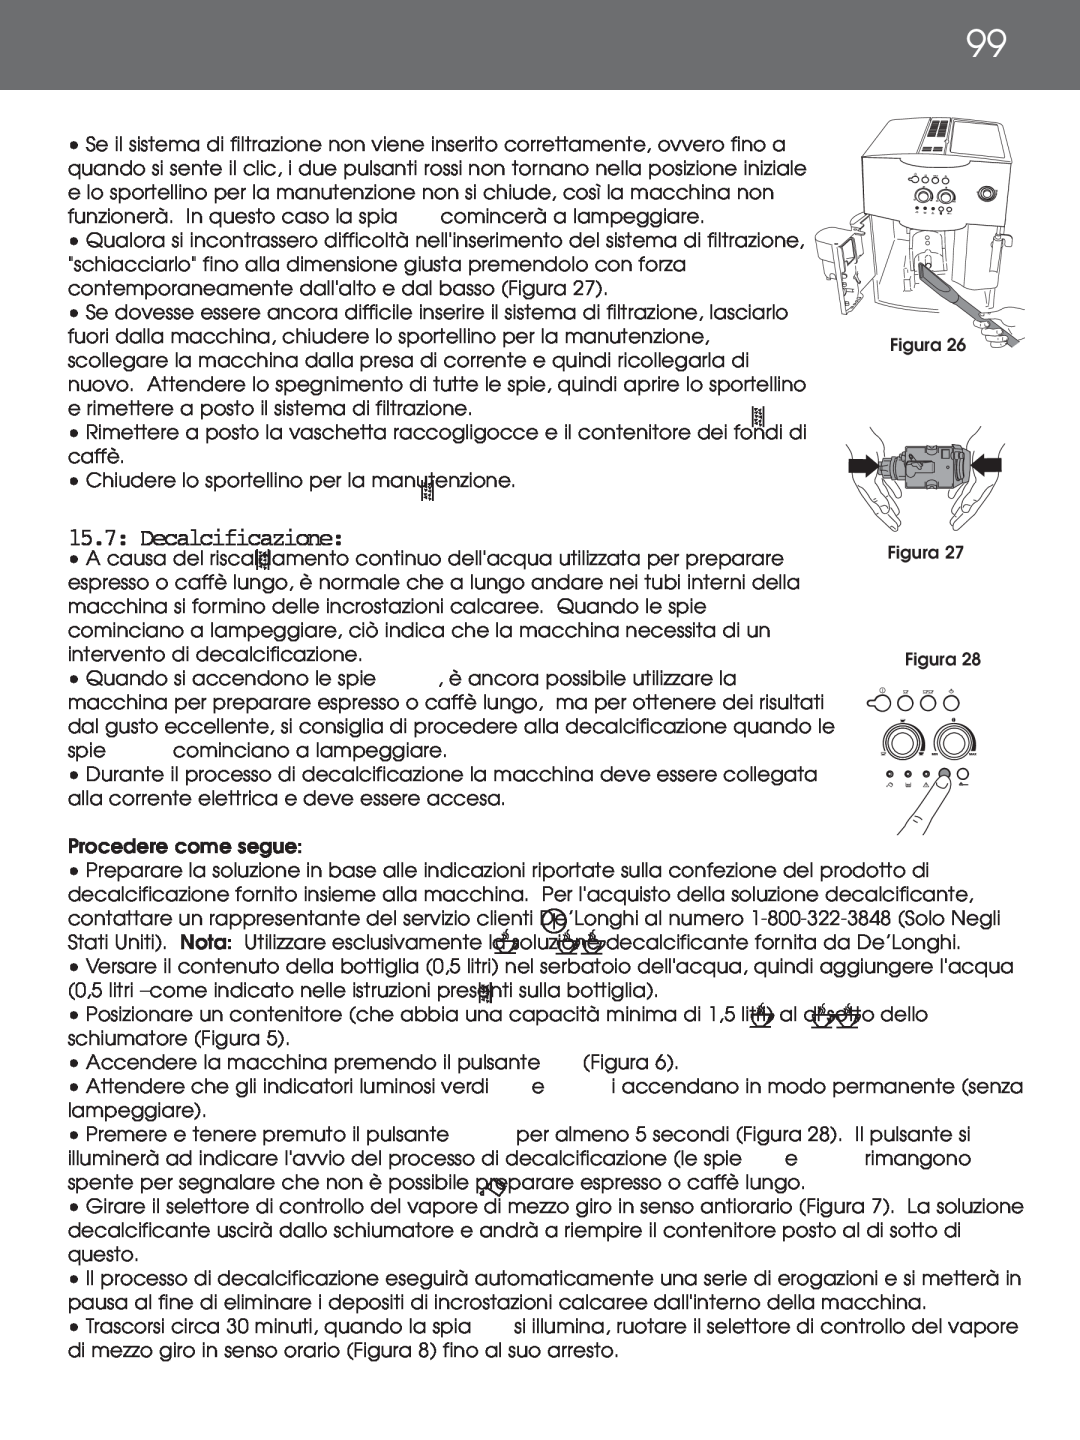 DeLonghi EAM4000 instruction manual 15.7: Decalcificazione 